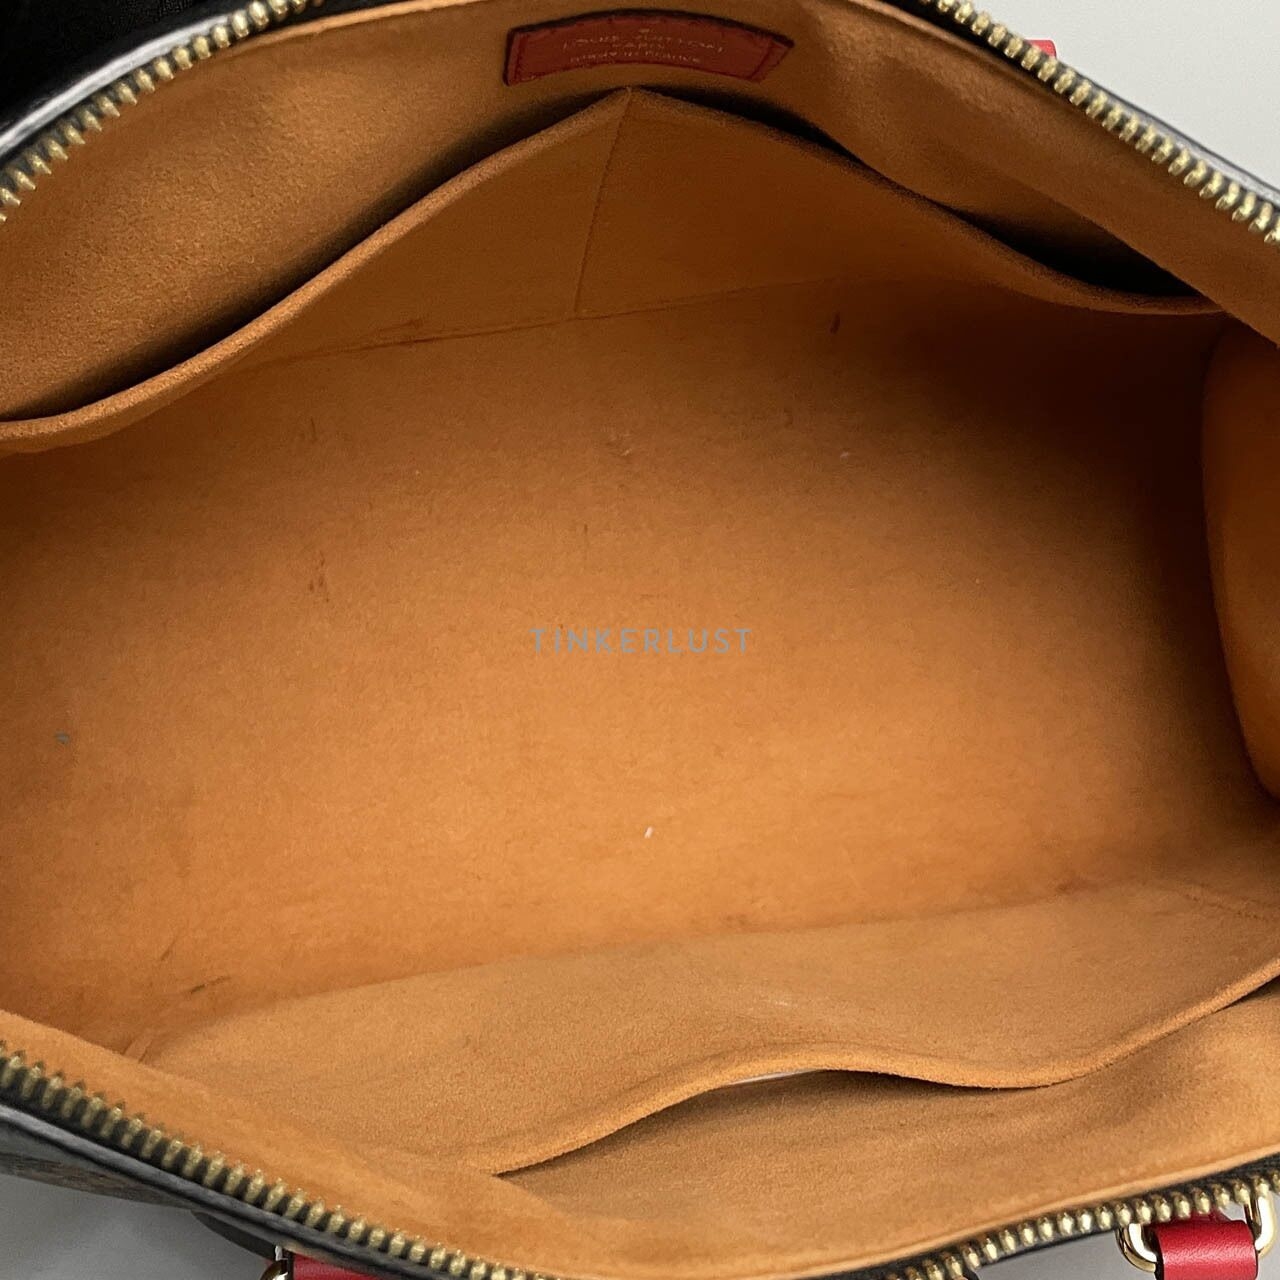 Louis Vuitton Monogram Tuileries Noir Cerise Coated Canvas GHW Handbag